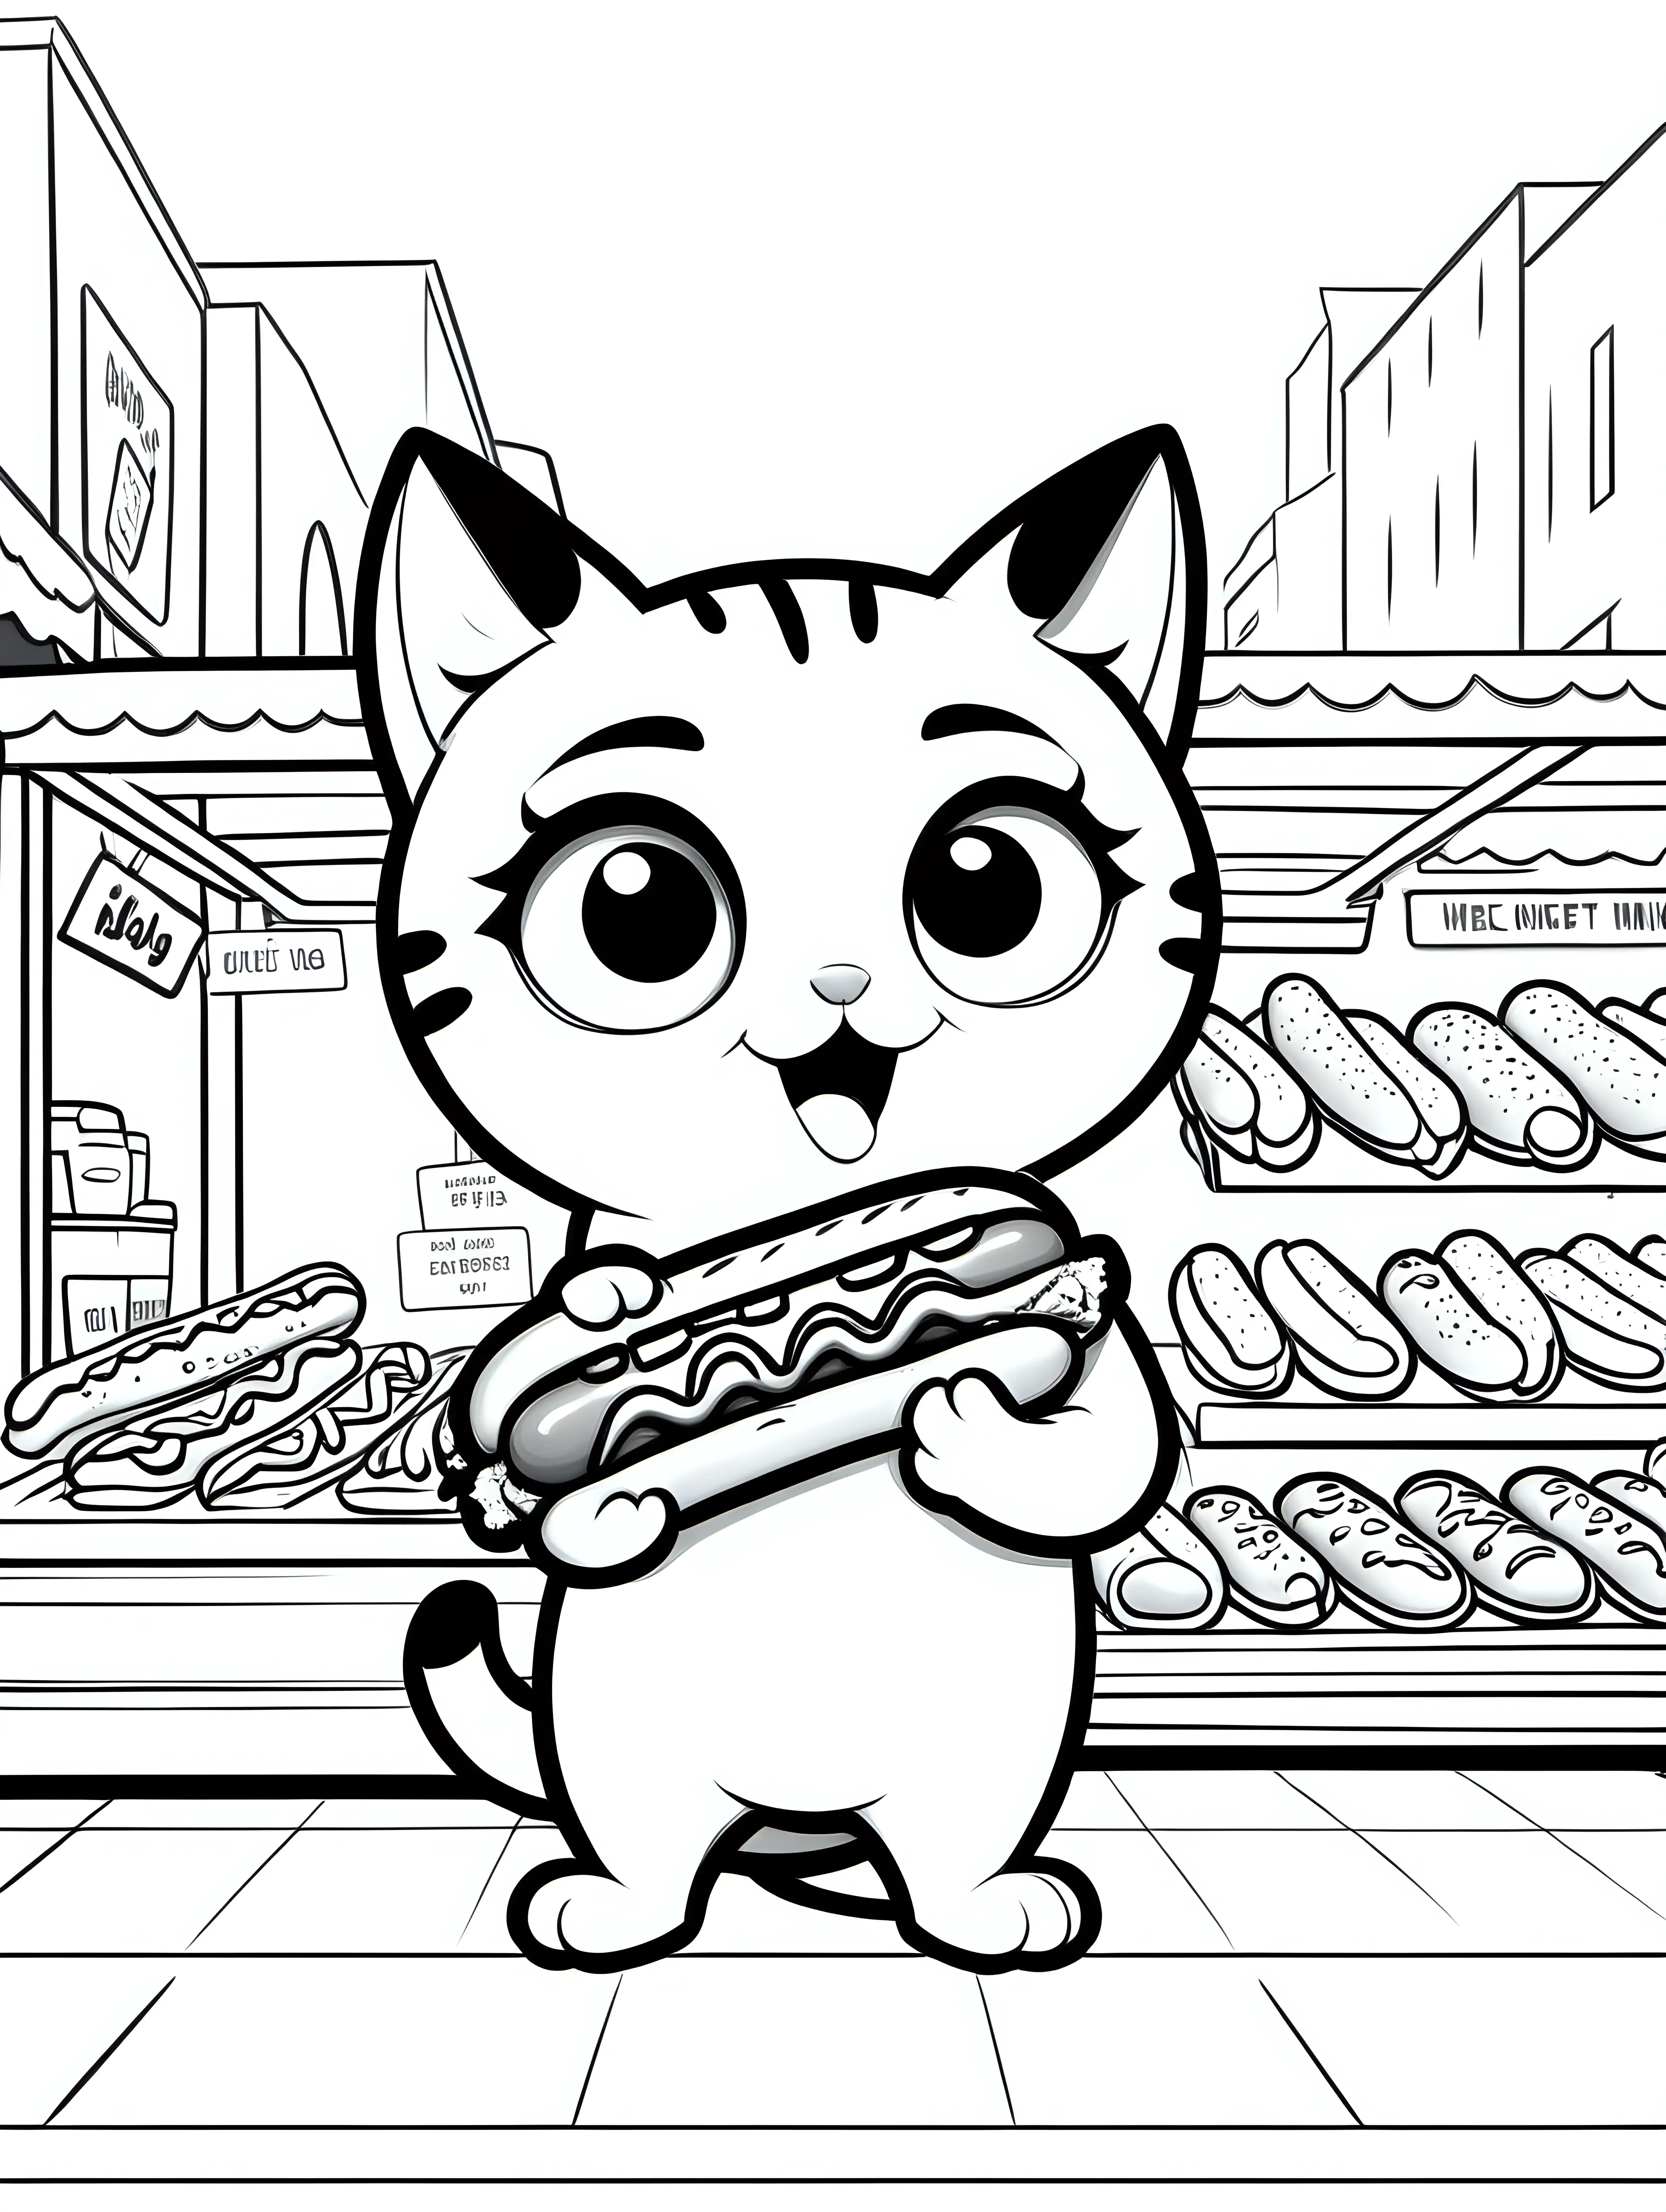 Adorable Cat Enjoying a Hot Dog at the Market